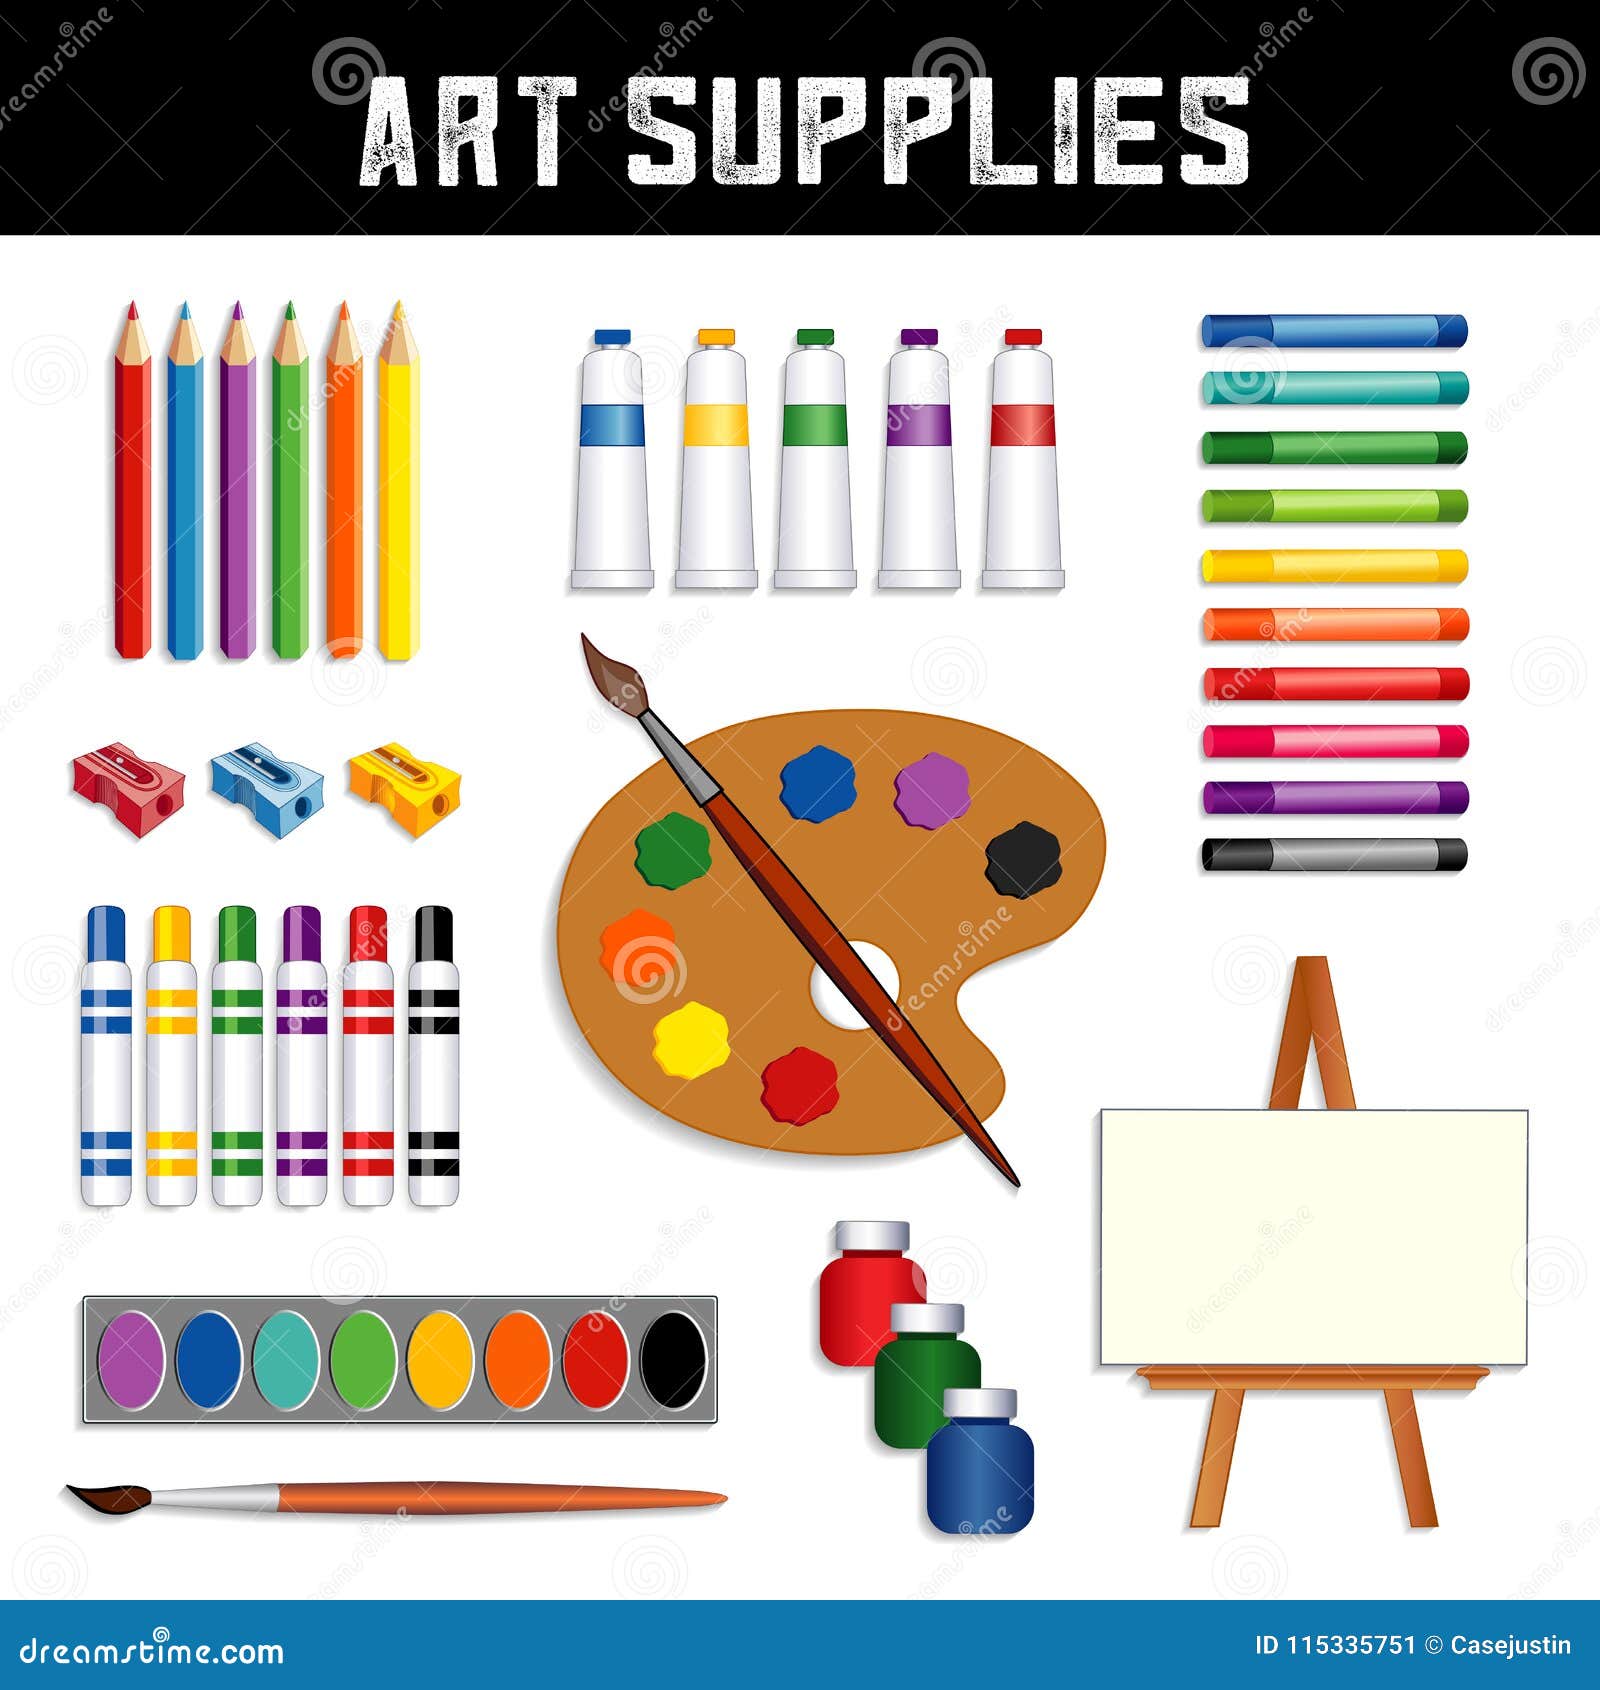 https://thumbs.dreamstime.com/z/art-supplies-paints-easel-watercolors-brushes-palette-collection-colored-pencils-sharpeners-tubes-paint-oil-pastel-crayons-felt-115335751.jpg